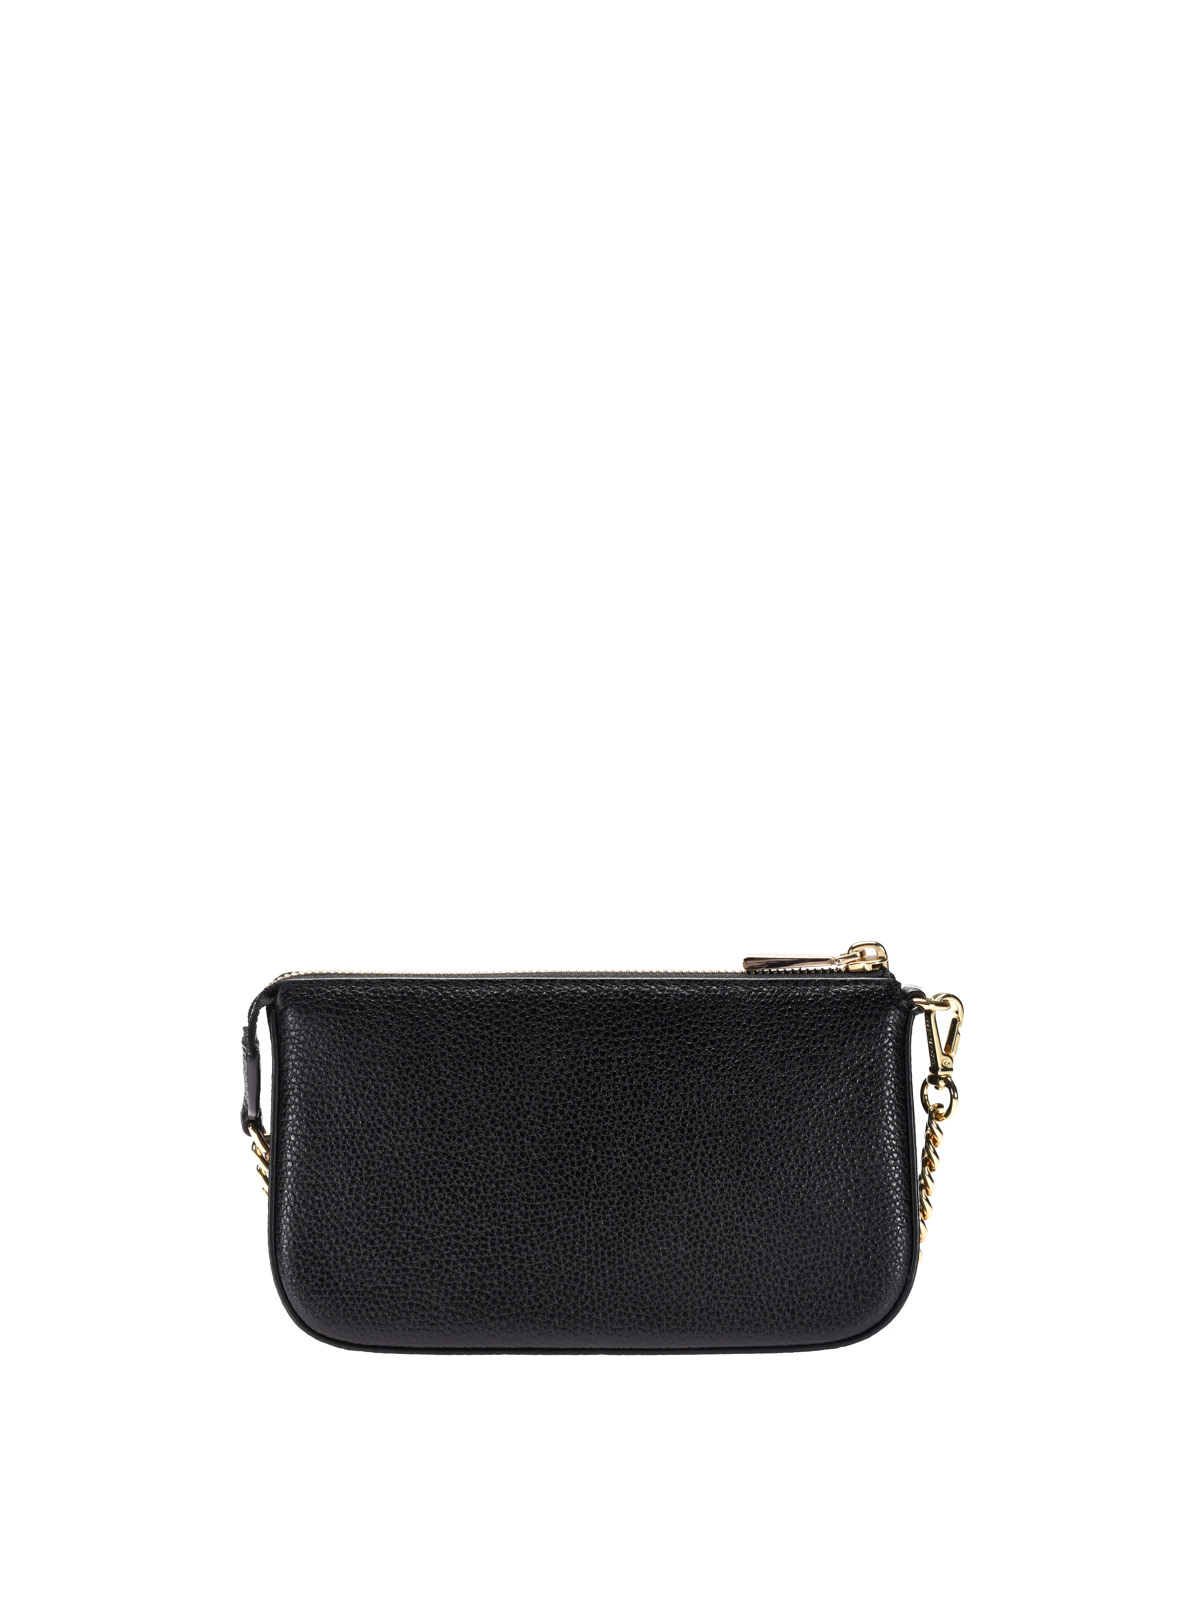 Michael Kors - Jet Set black wristlet purse - wallets & purses - 32F7GFDW6L001